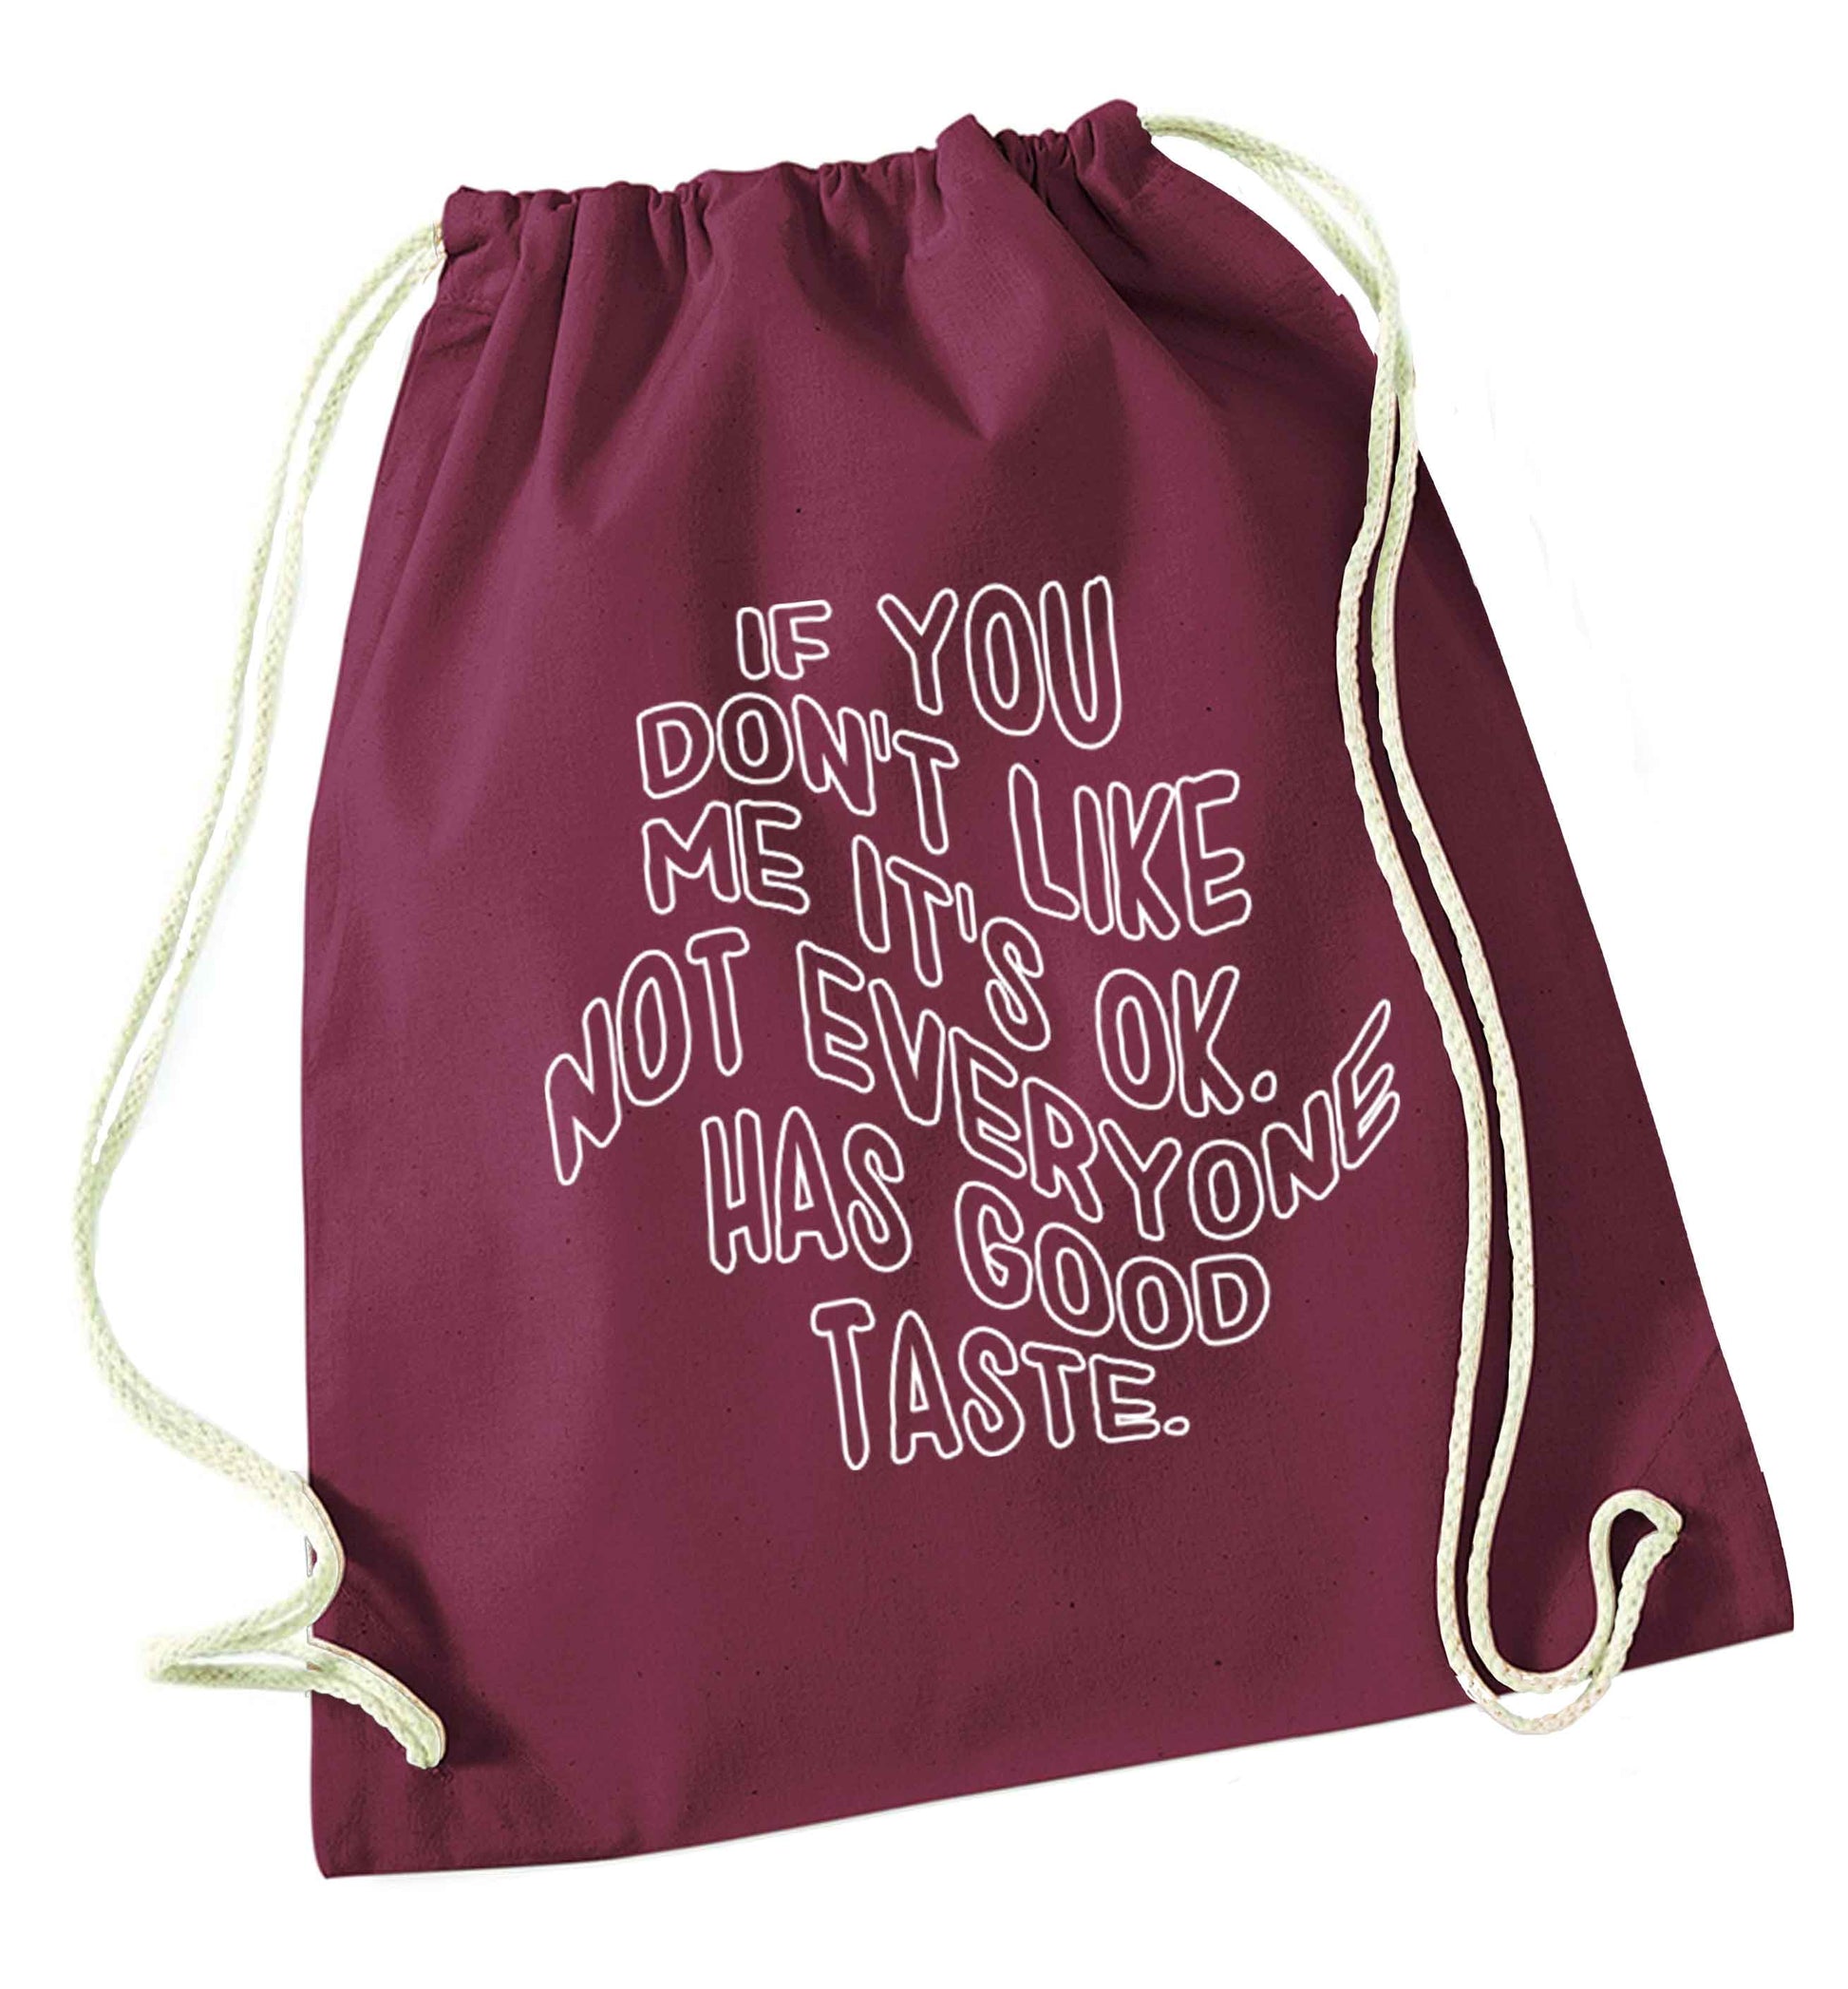 If you don't like me it's ok not everyone has good taste maroon drawstring bag